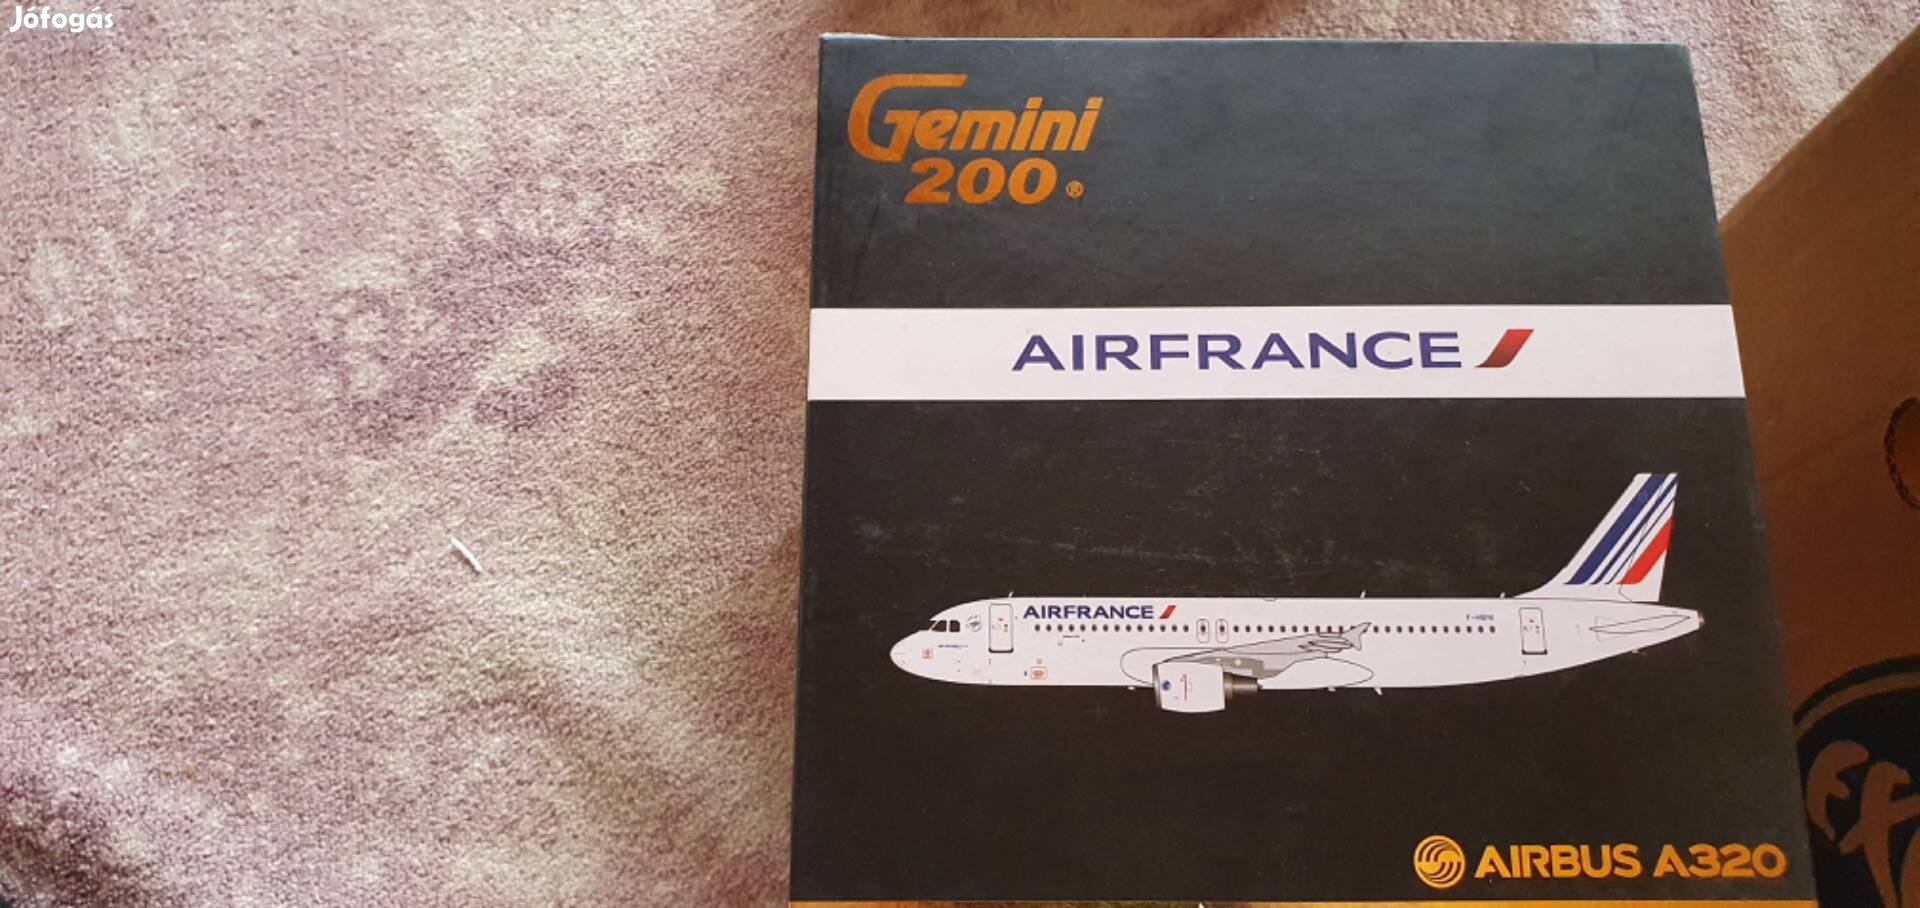 Gemini200 Air France A320 fém repülőgép modell